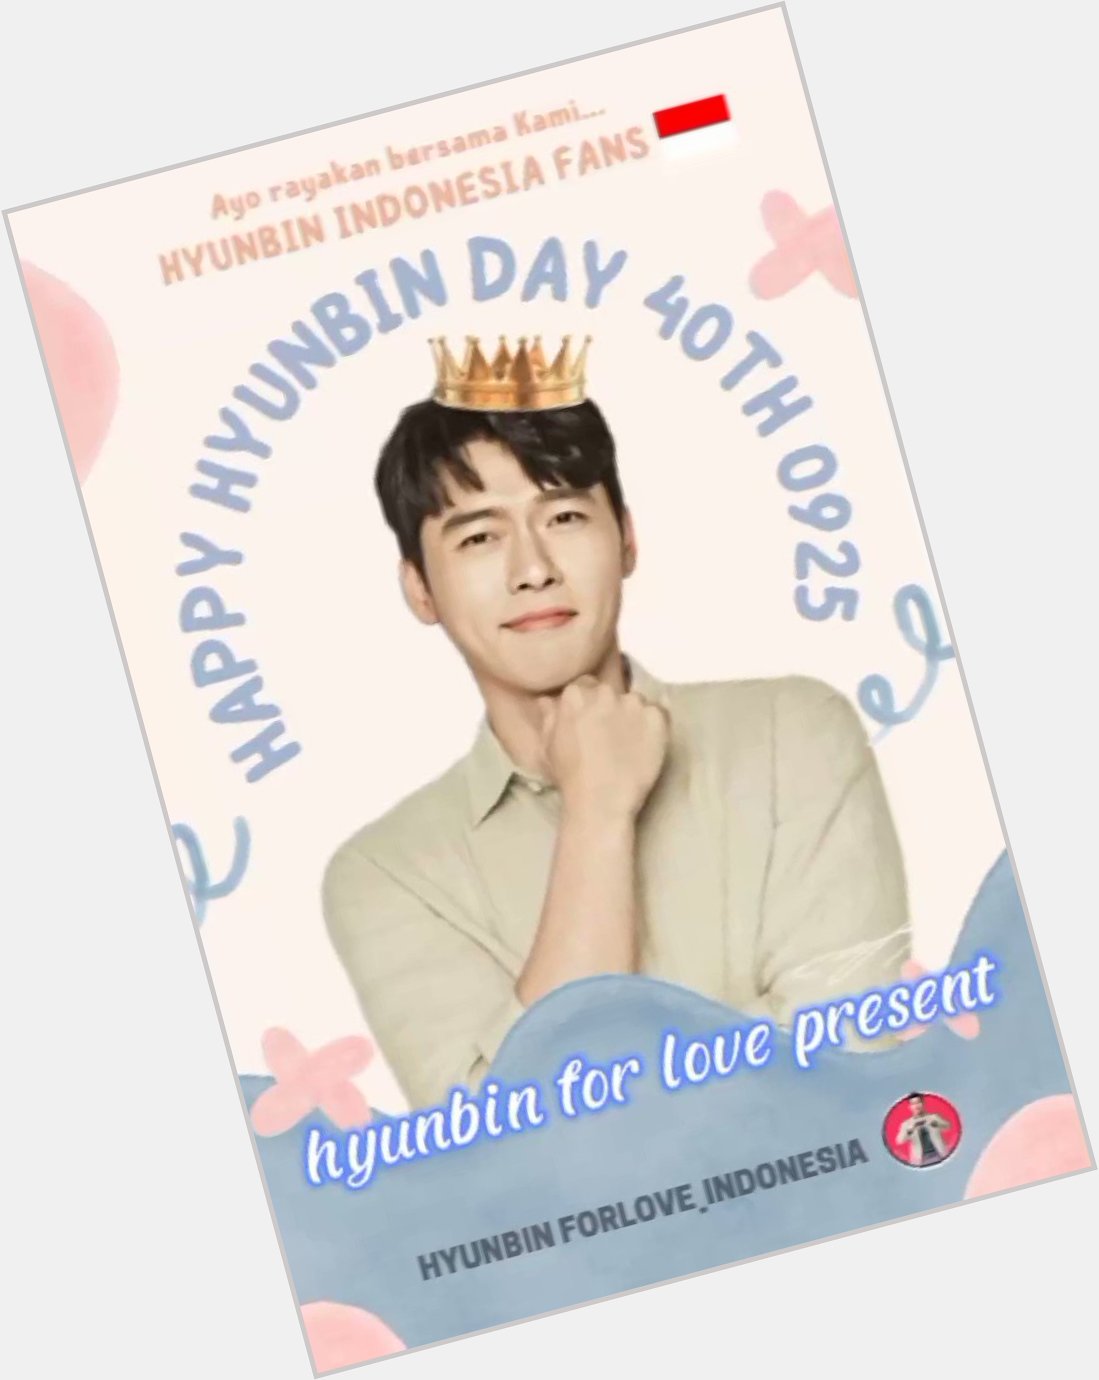 Hyun Bin For Love present

happy birthday oppa

happy Hyunbin day    